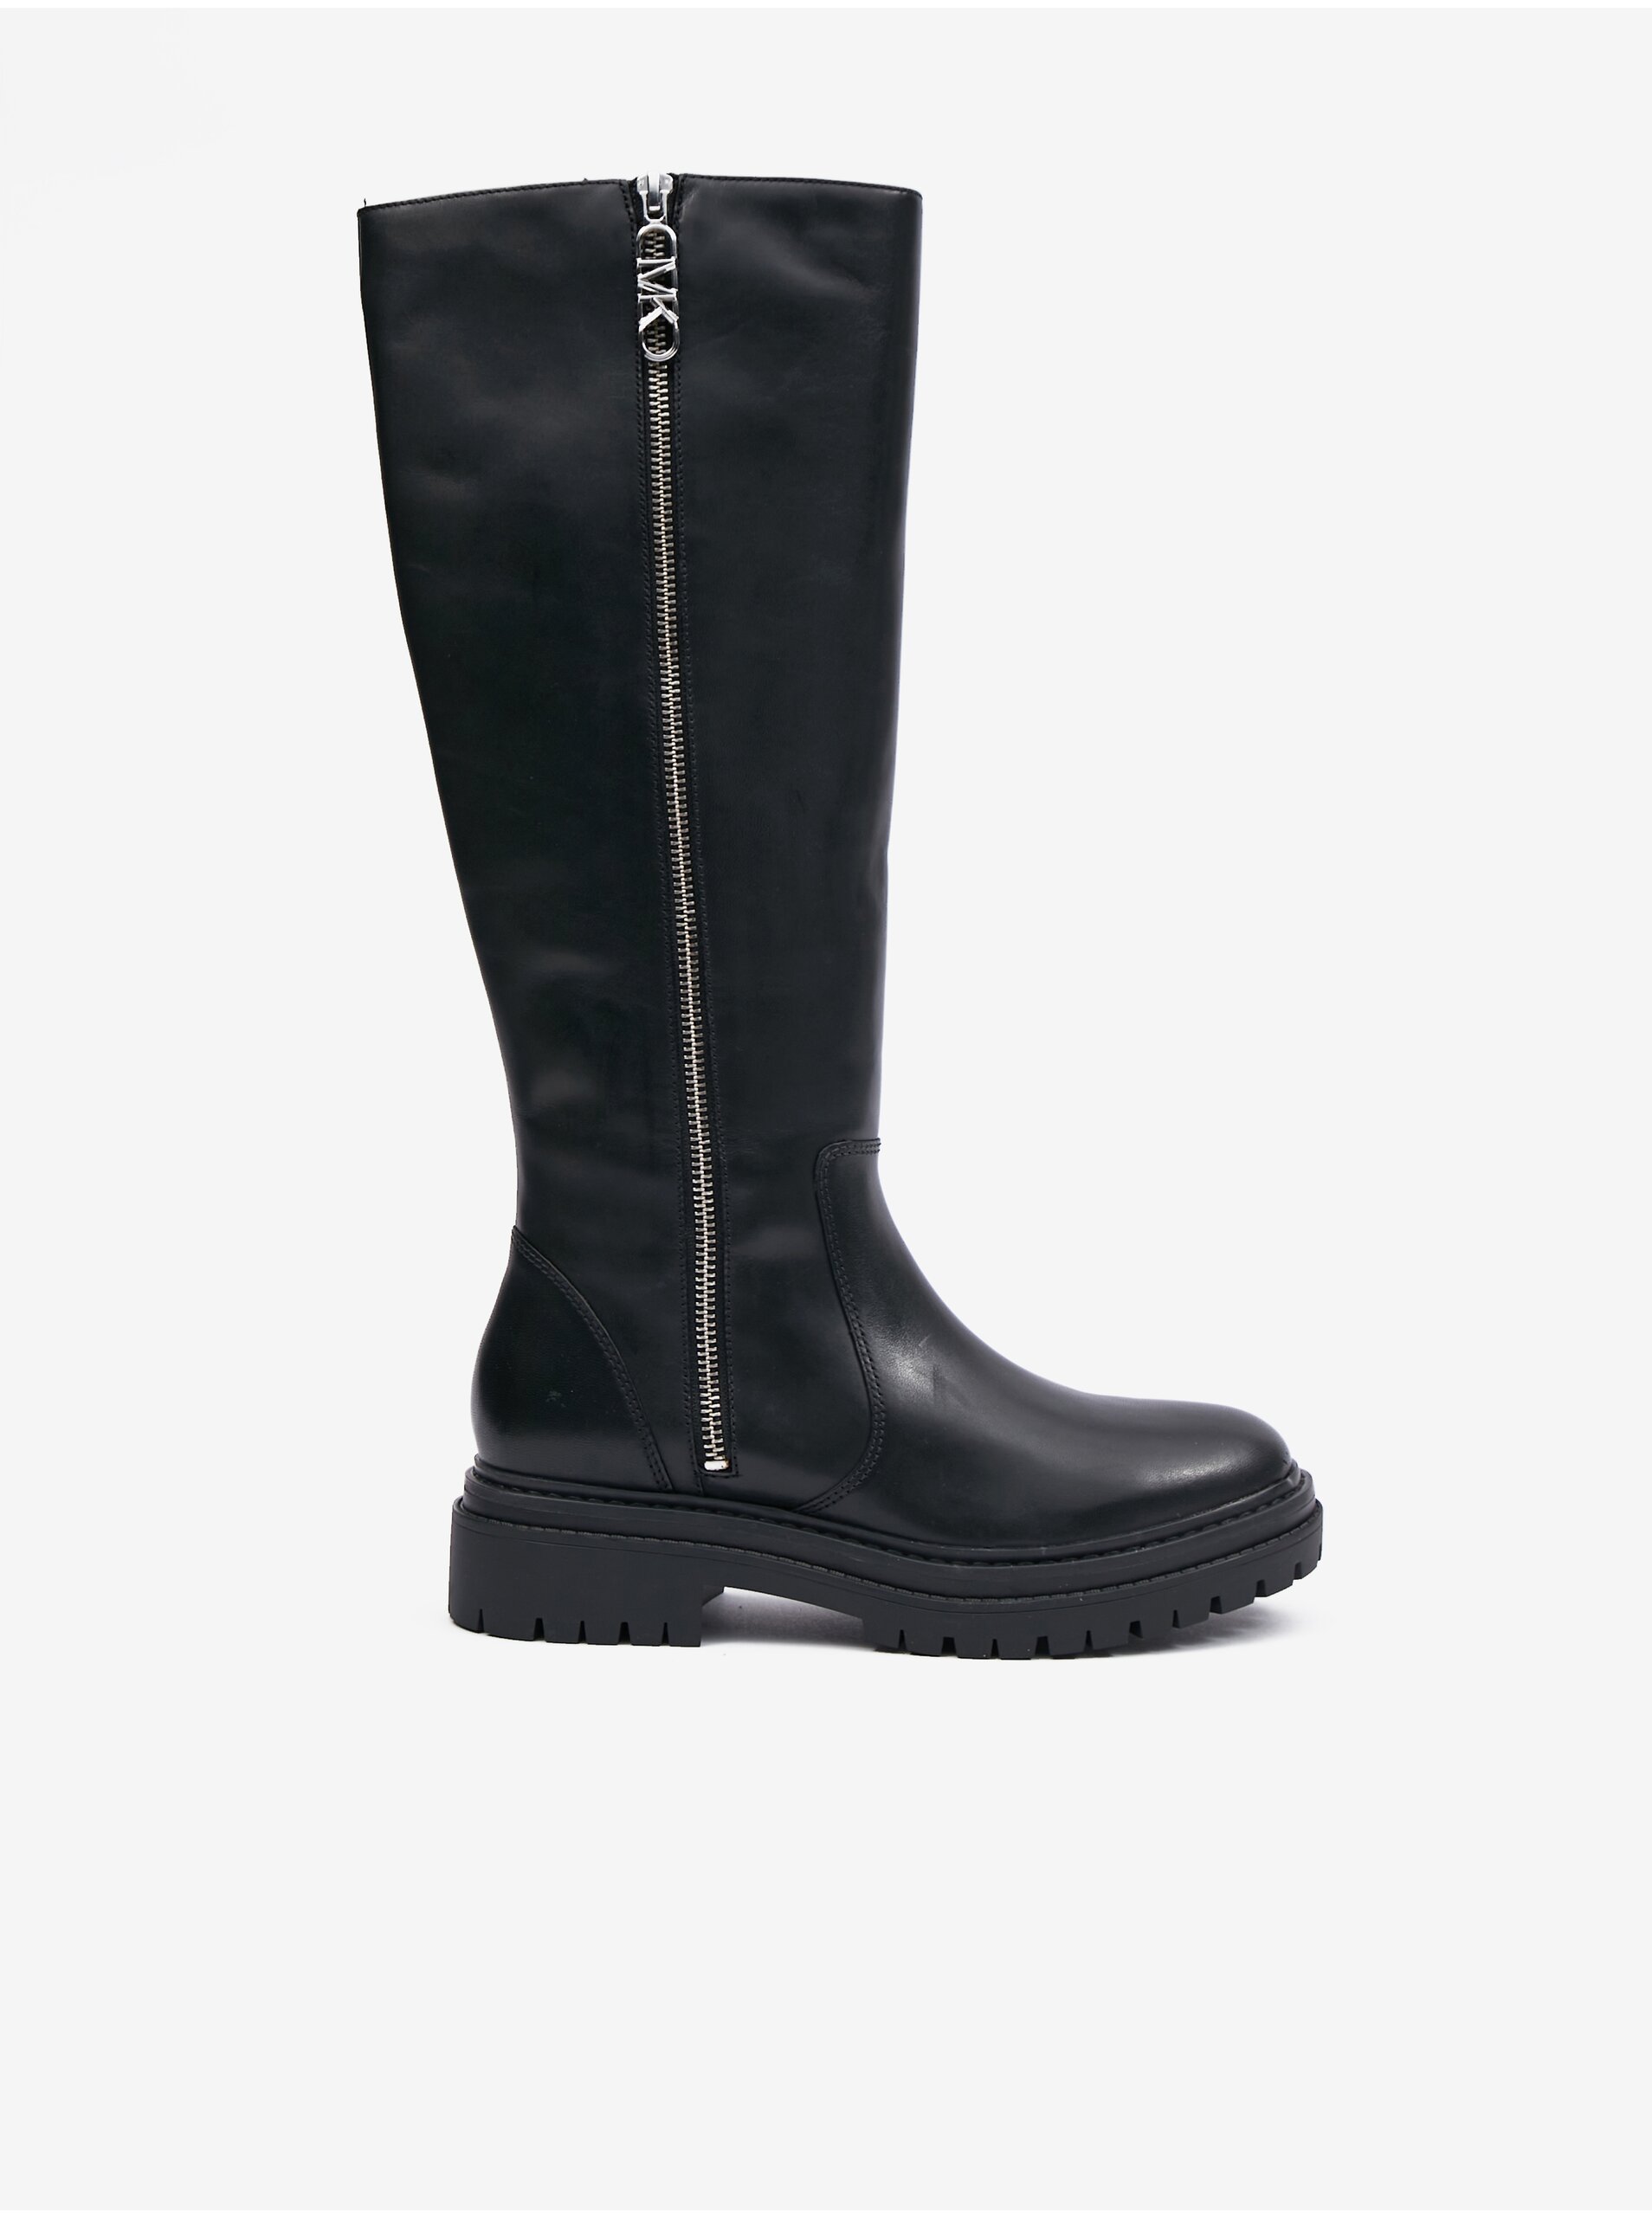 Black Women's Leather Boots Michael Kors Regan - Ladies